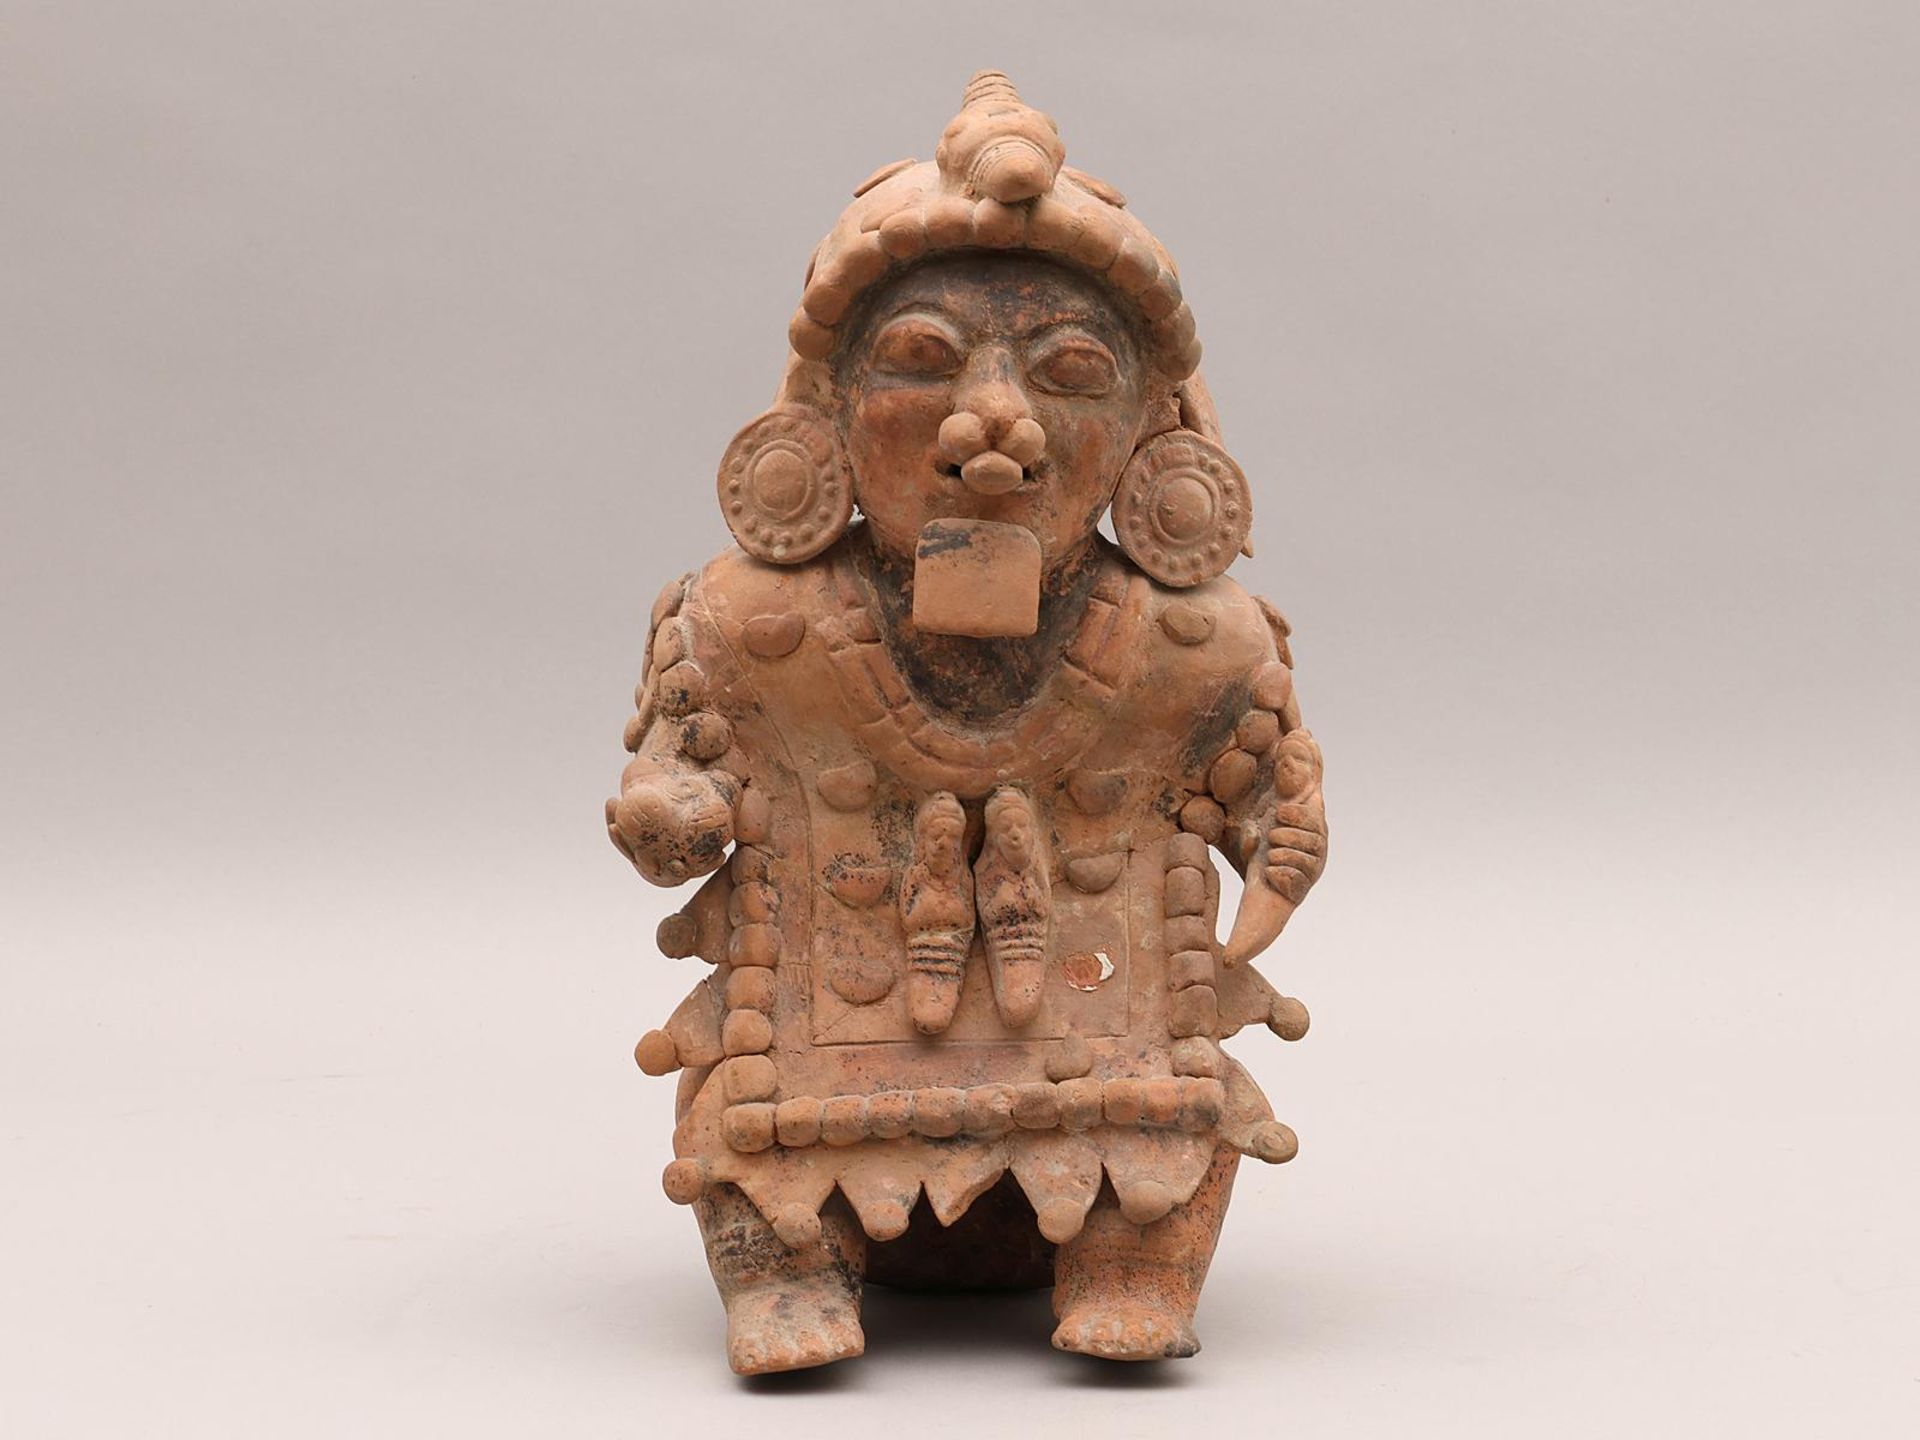 Equador, Jamacoaque, 100-500 AD, sculpture of a seated priest figure.